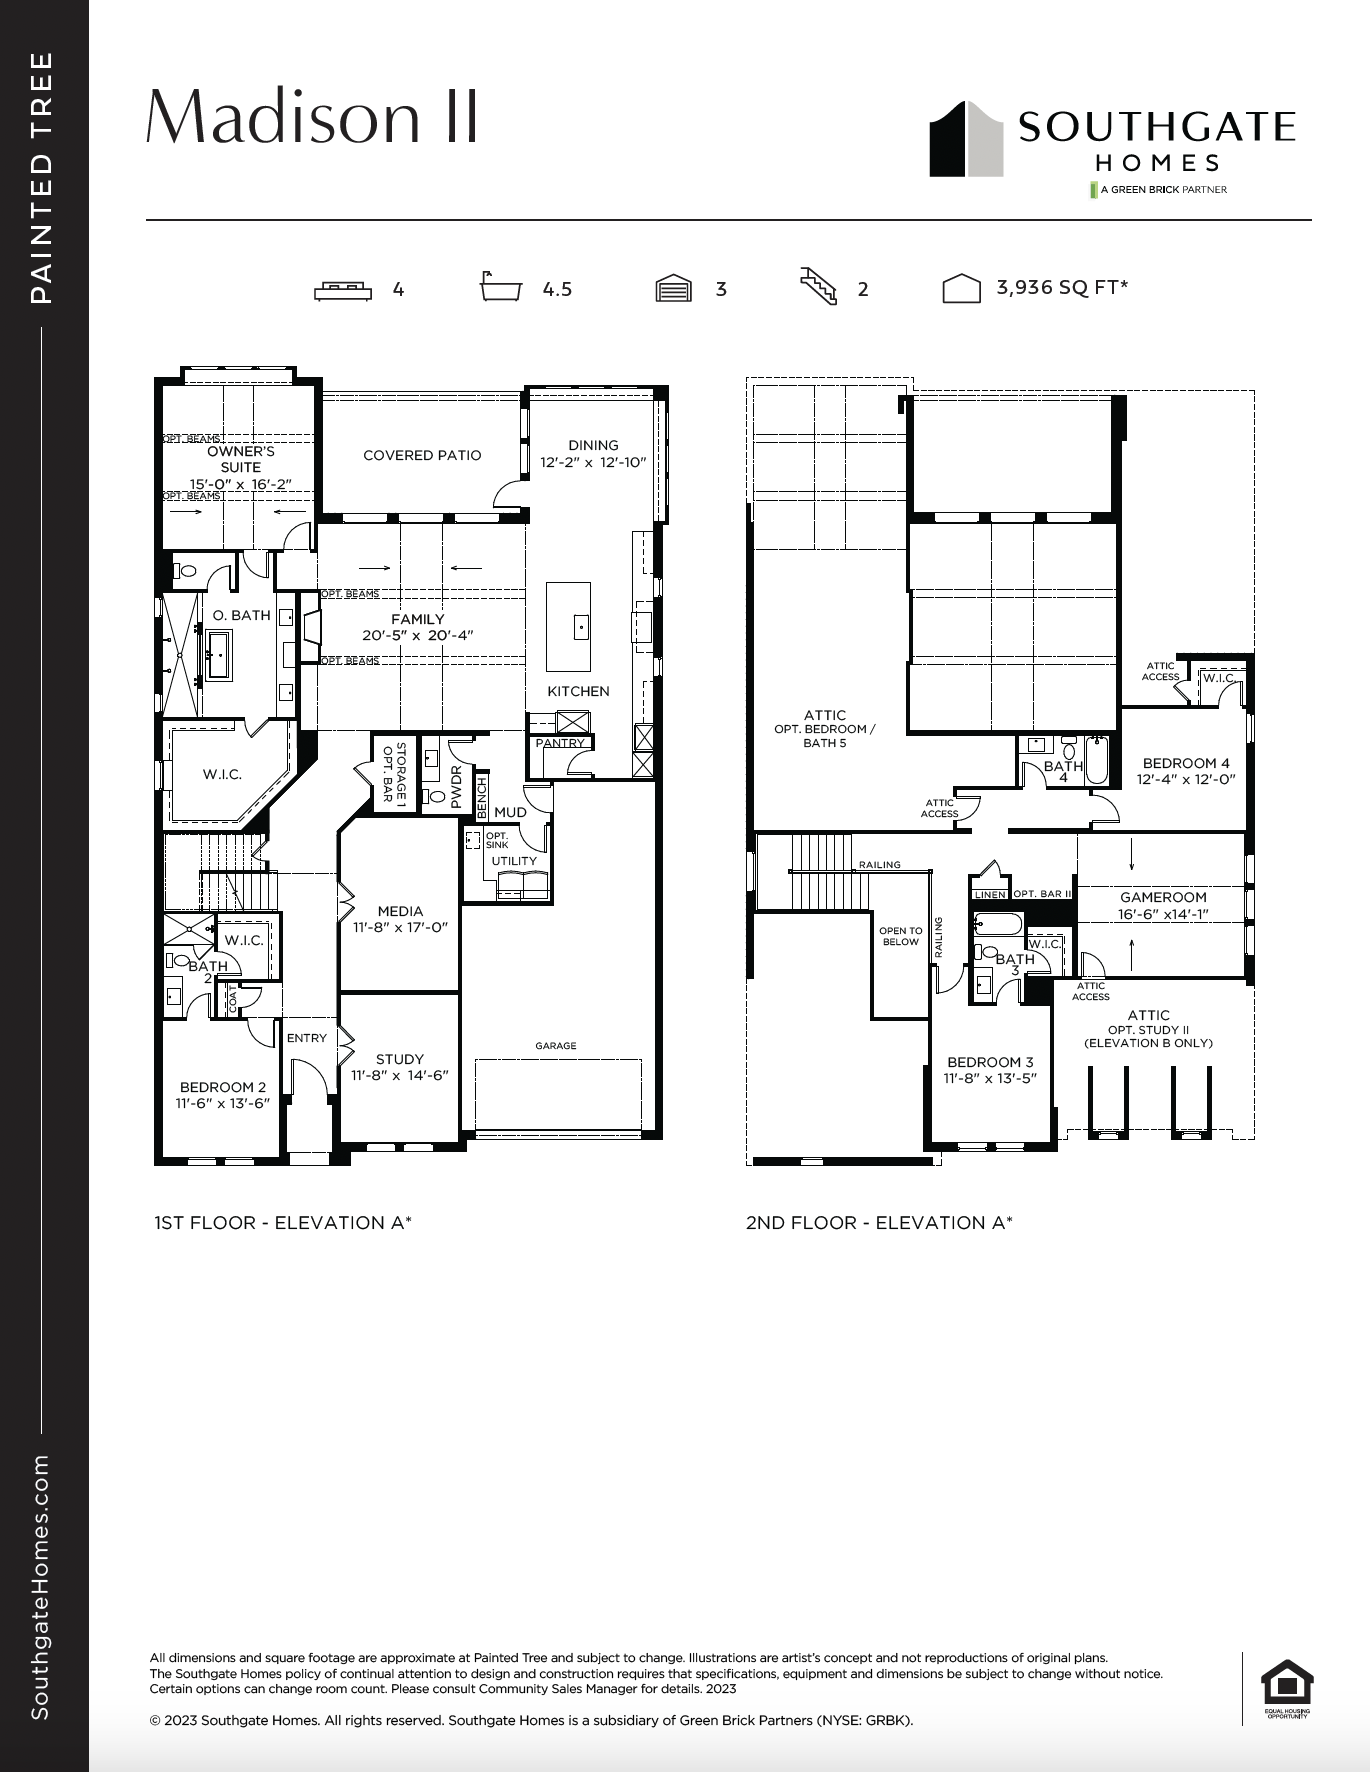 southgate homes Madison II model home floorplan